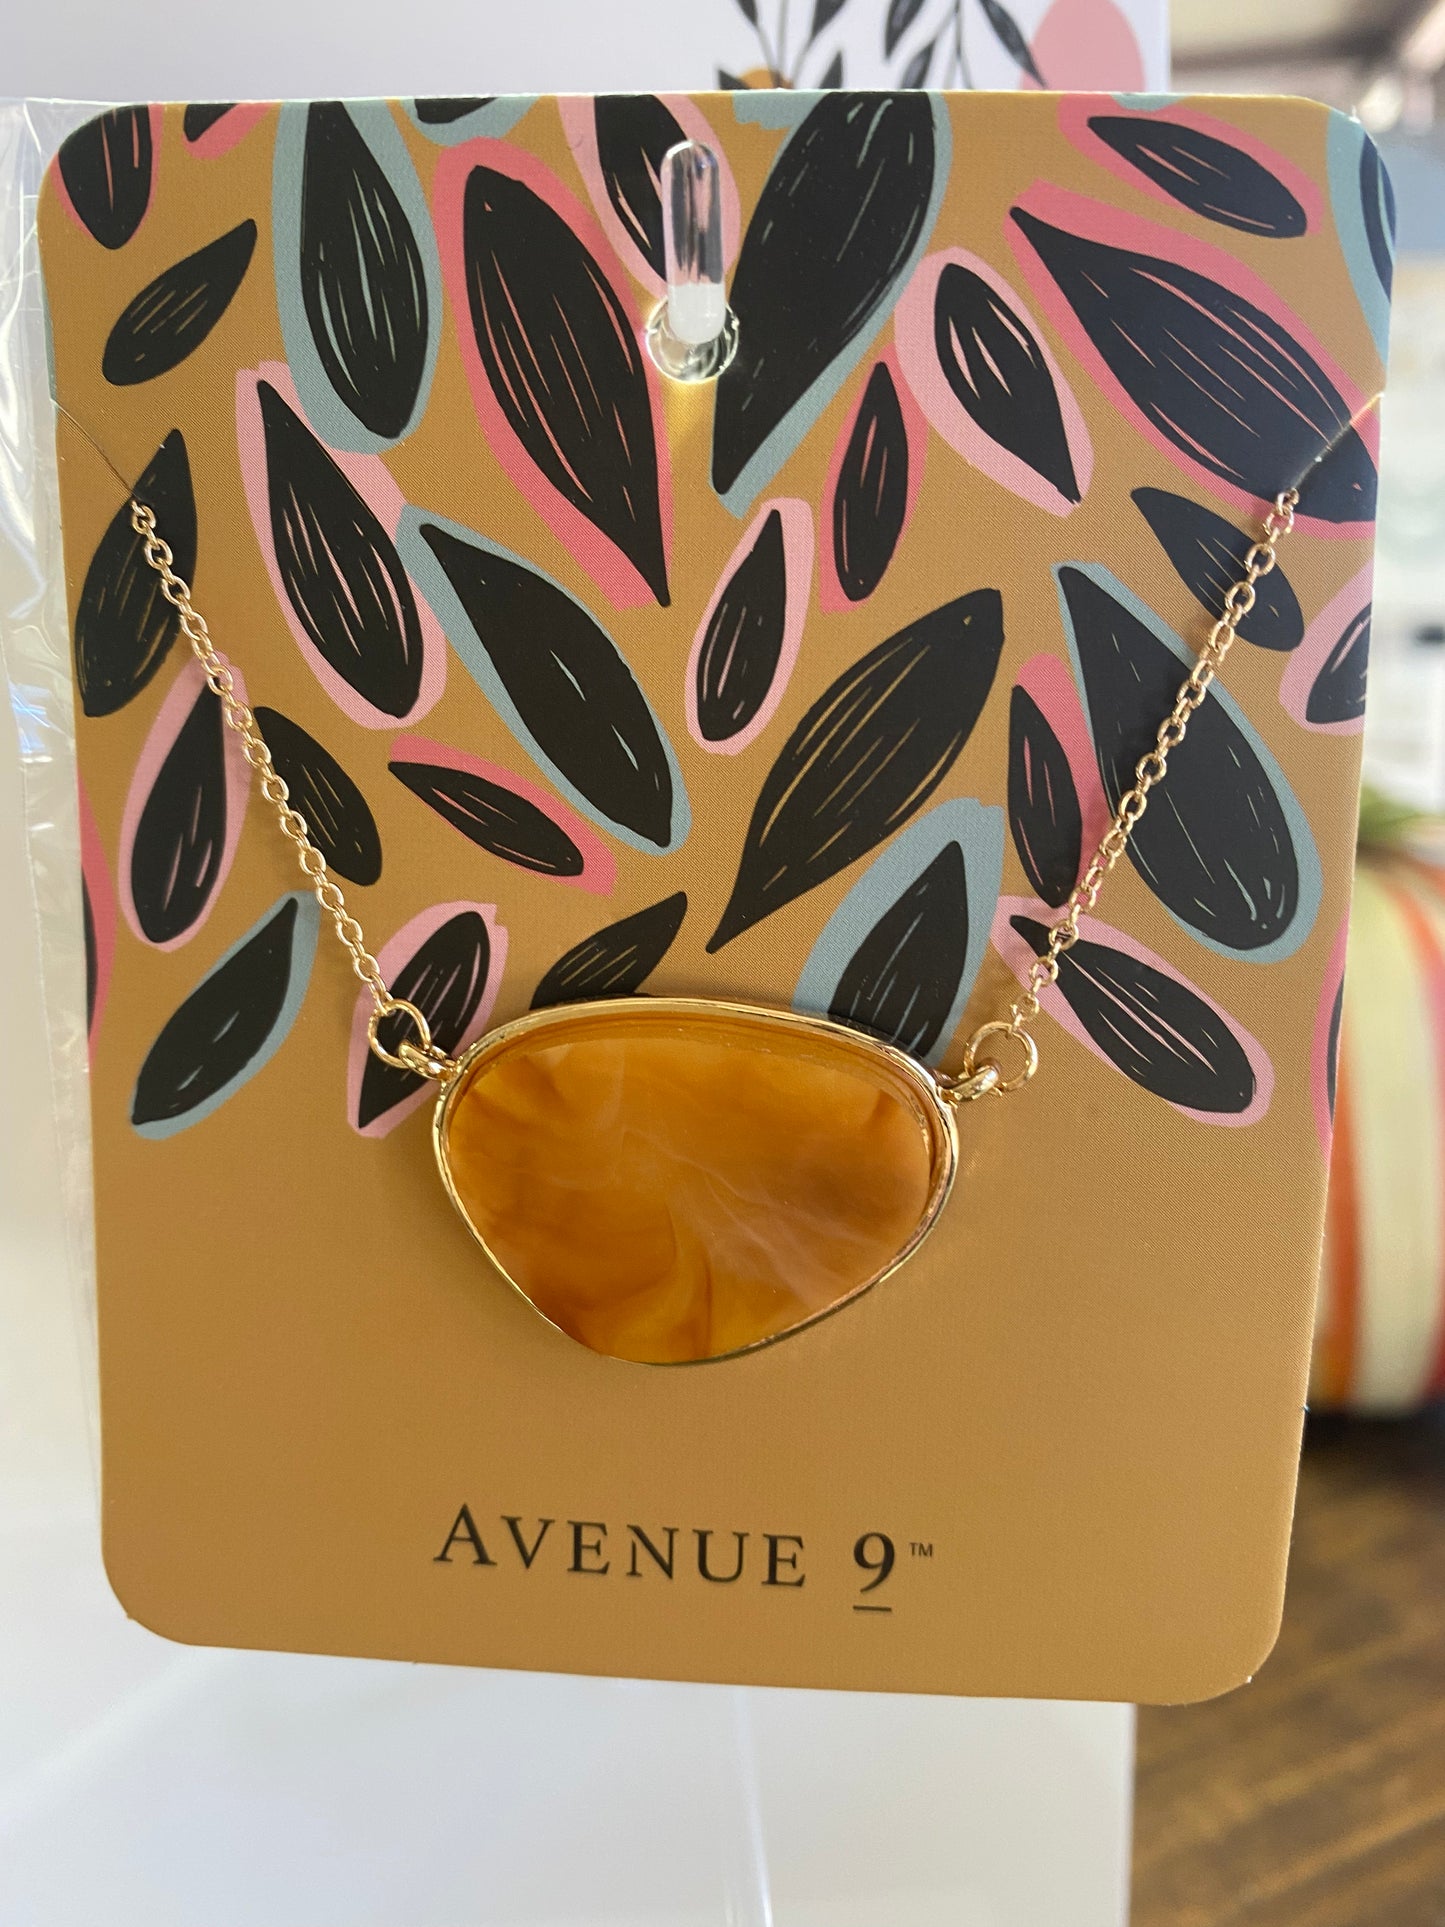 Avenue 9 Necklace - Whitt & Co. Clothing